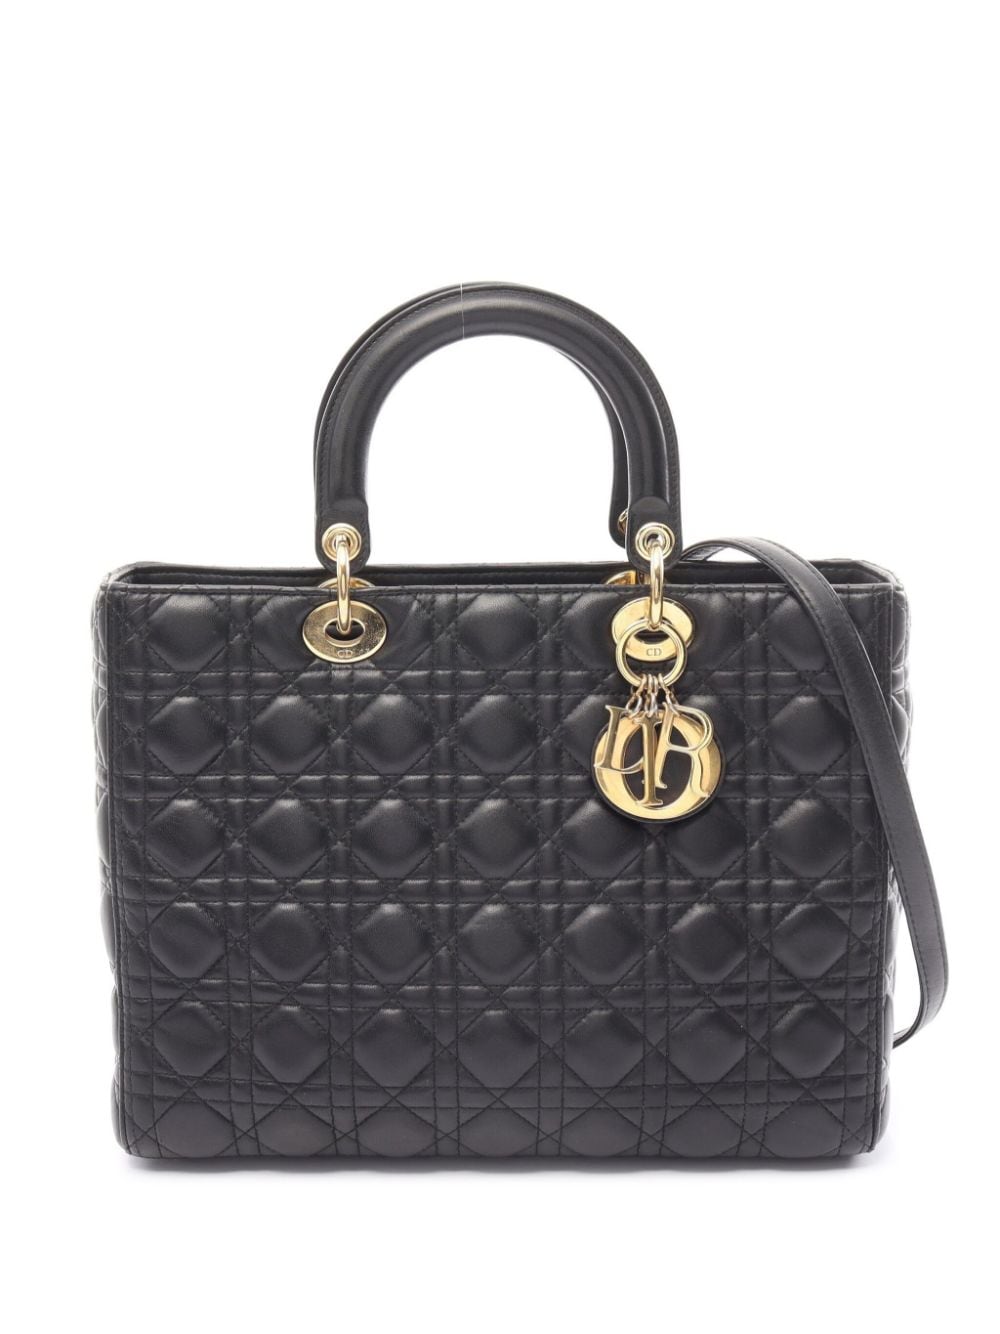 2000s large Cannage Lady Dior two-way handbag